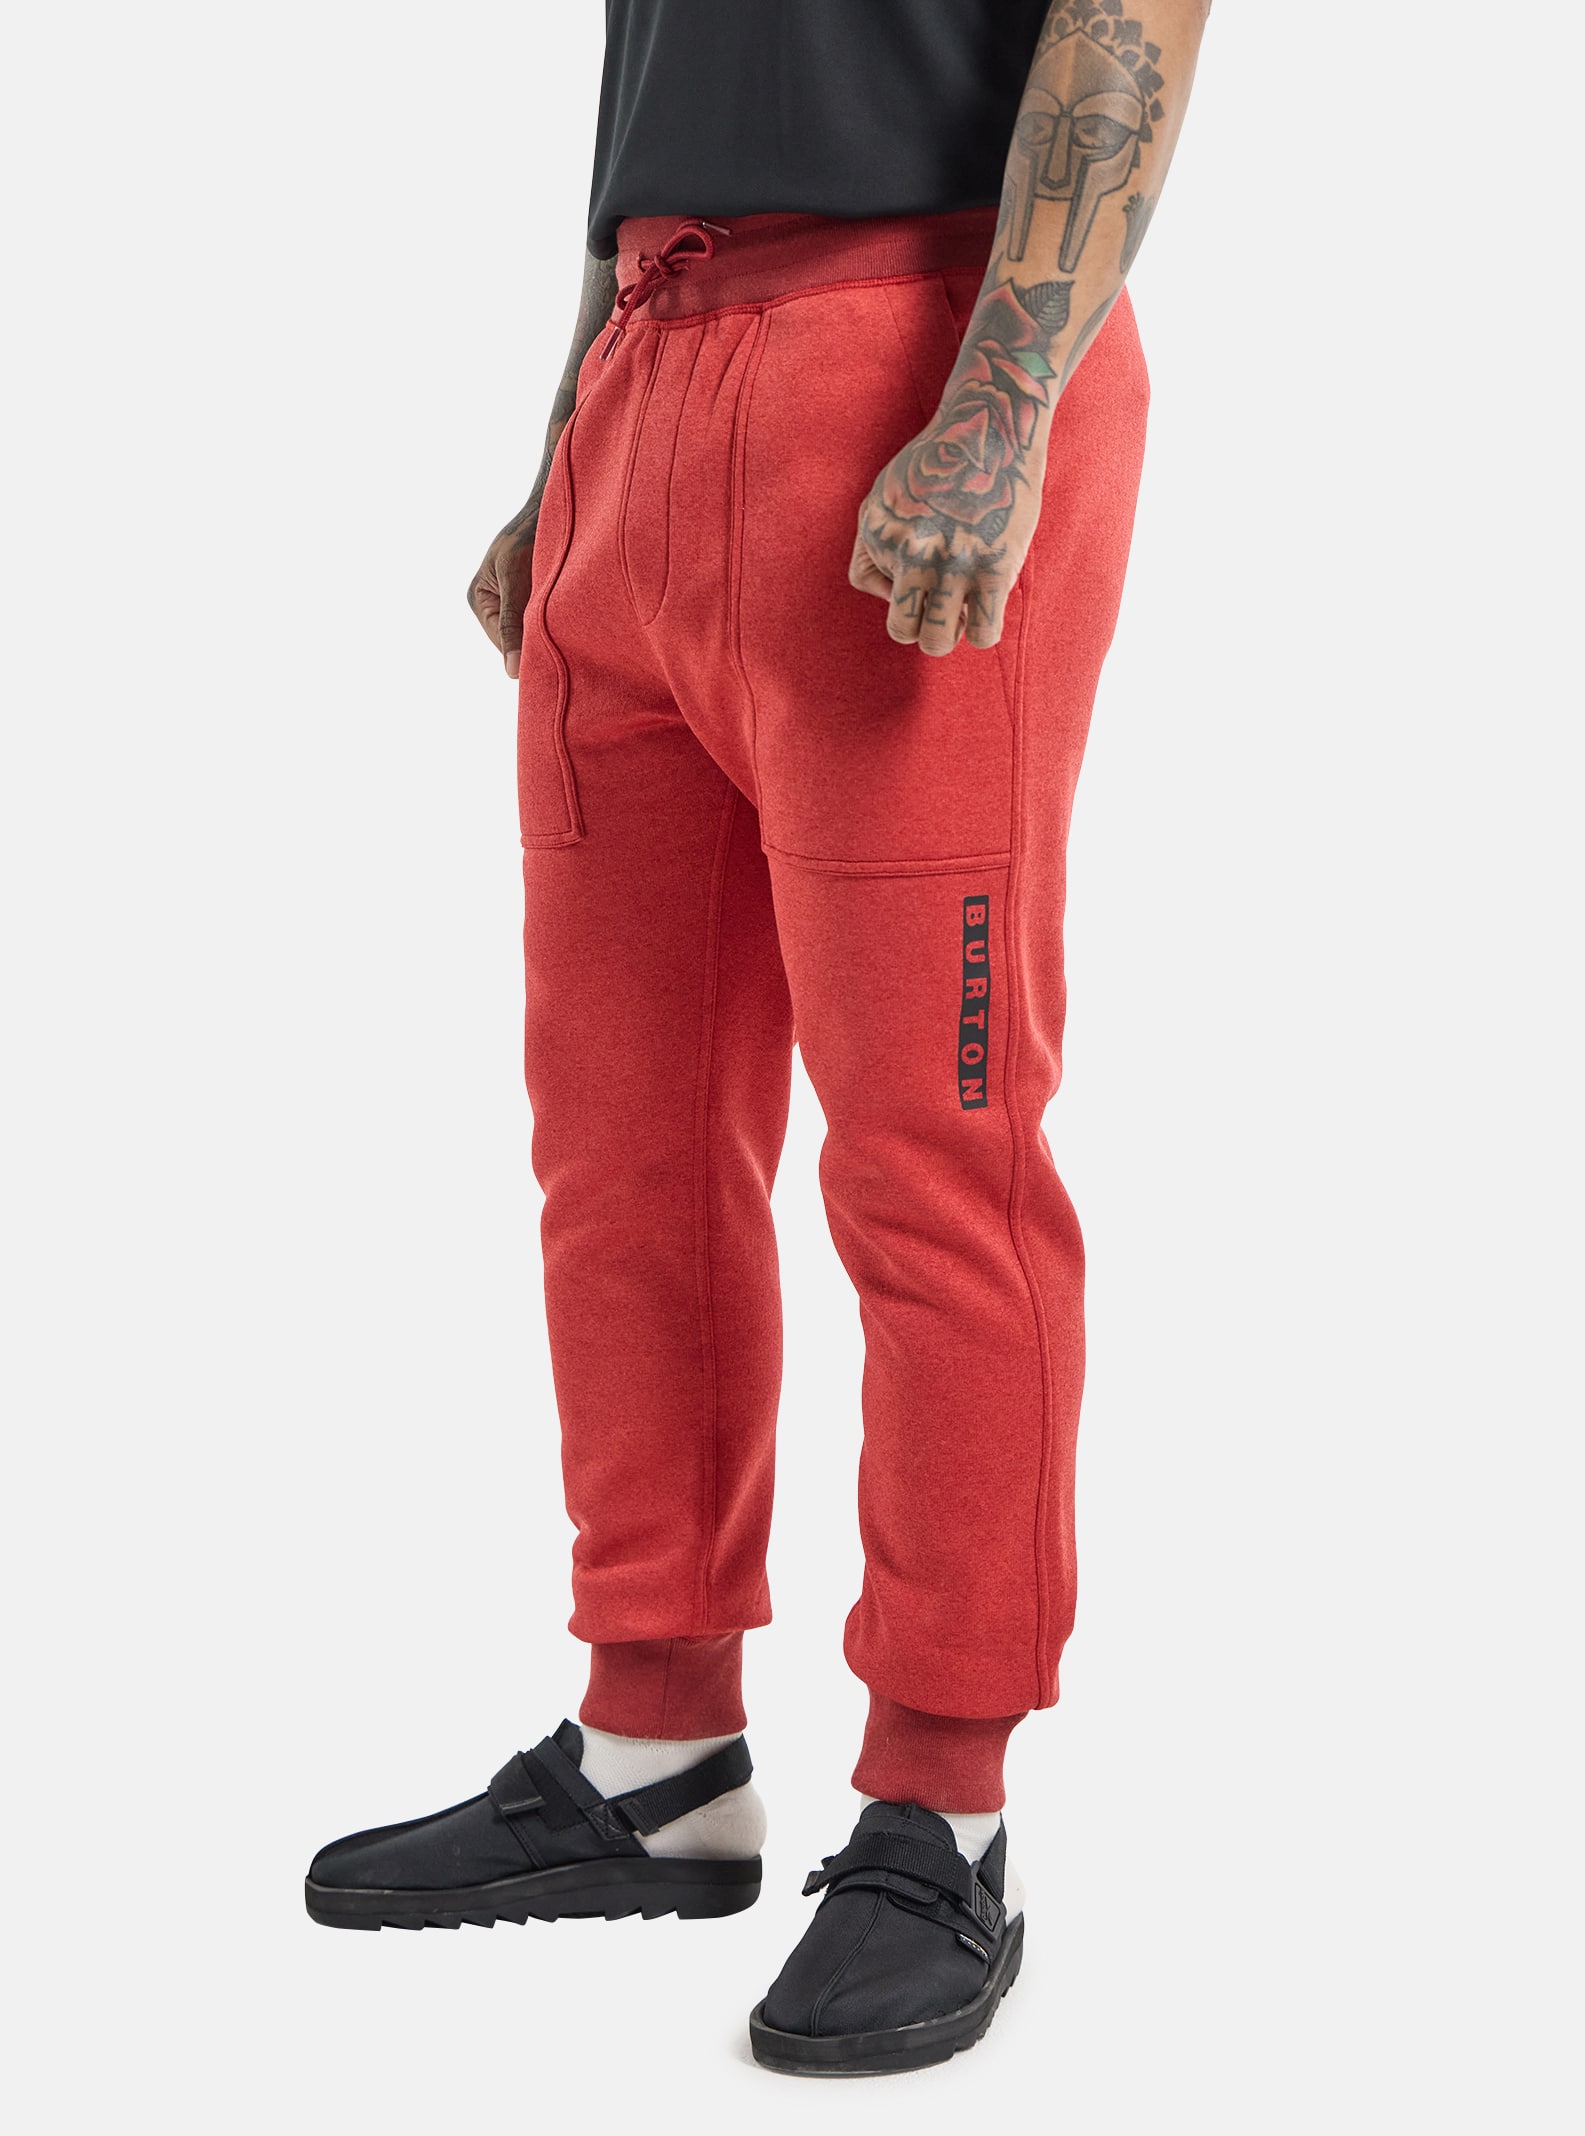 Men's Streetwear Trousers & Cargo Pants | Burton Snowboards GB